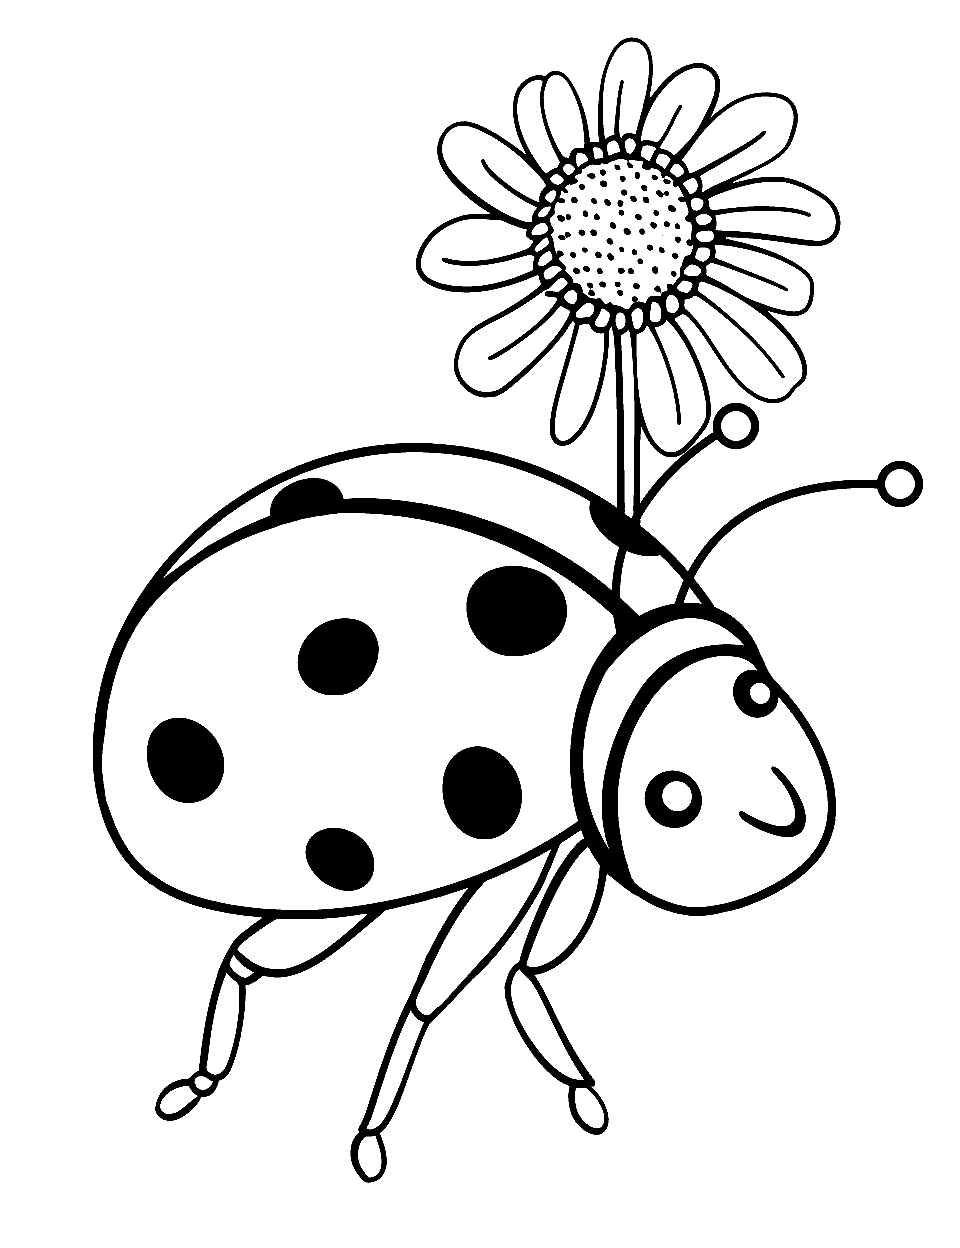 Curious Ladybird Beetle Ladybug Coloring Page - A ladybird exploring a single daisy flower.